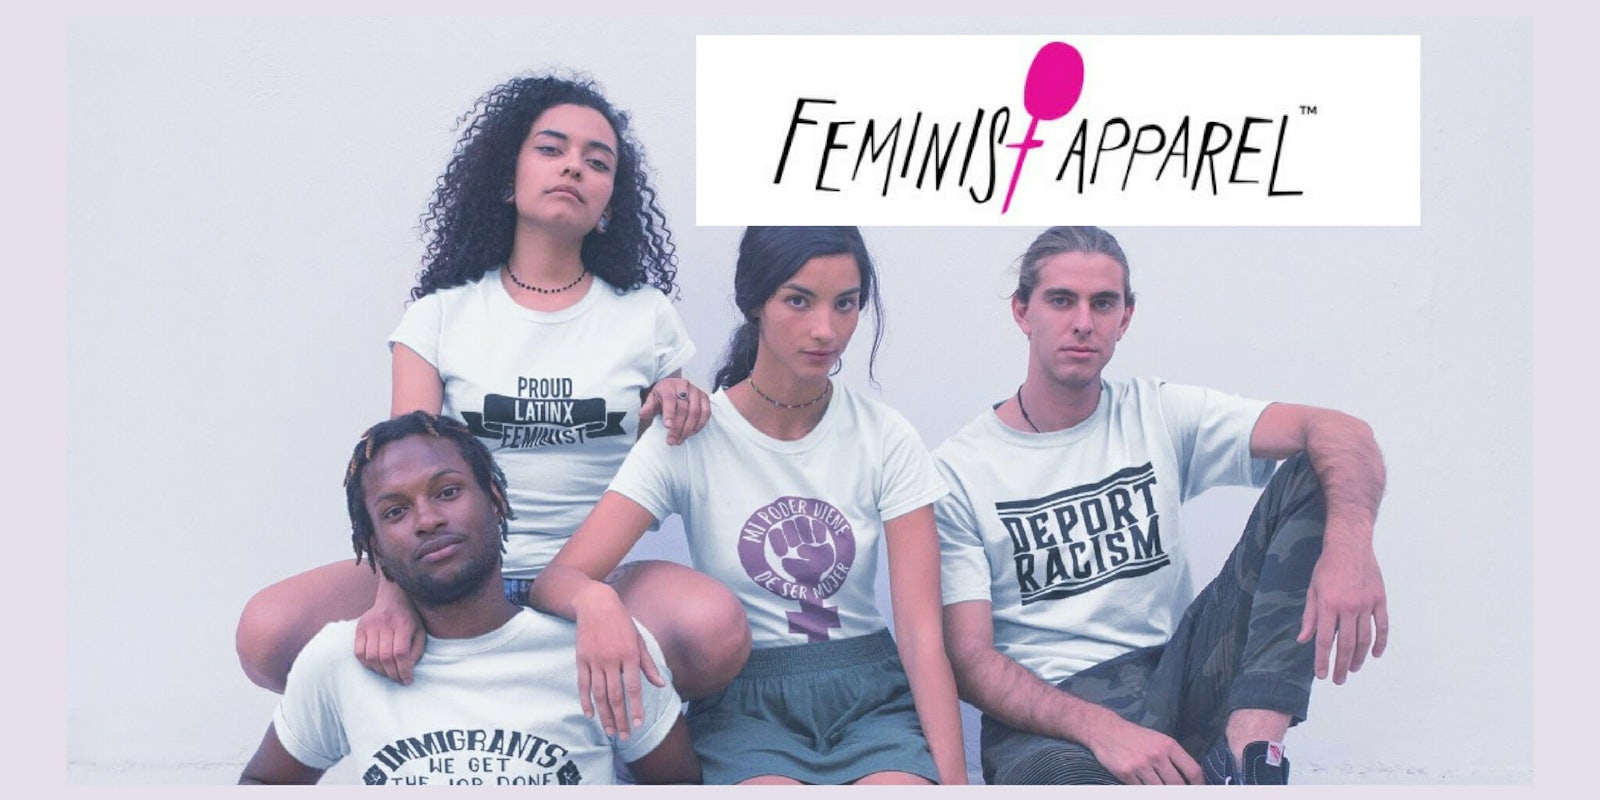 Feminist Apparel's website